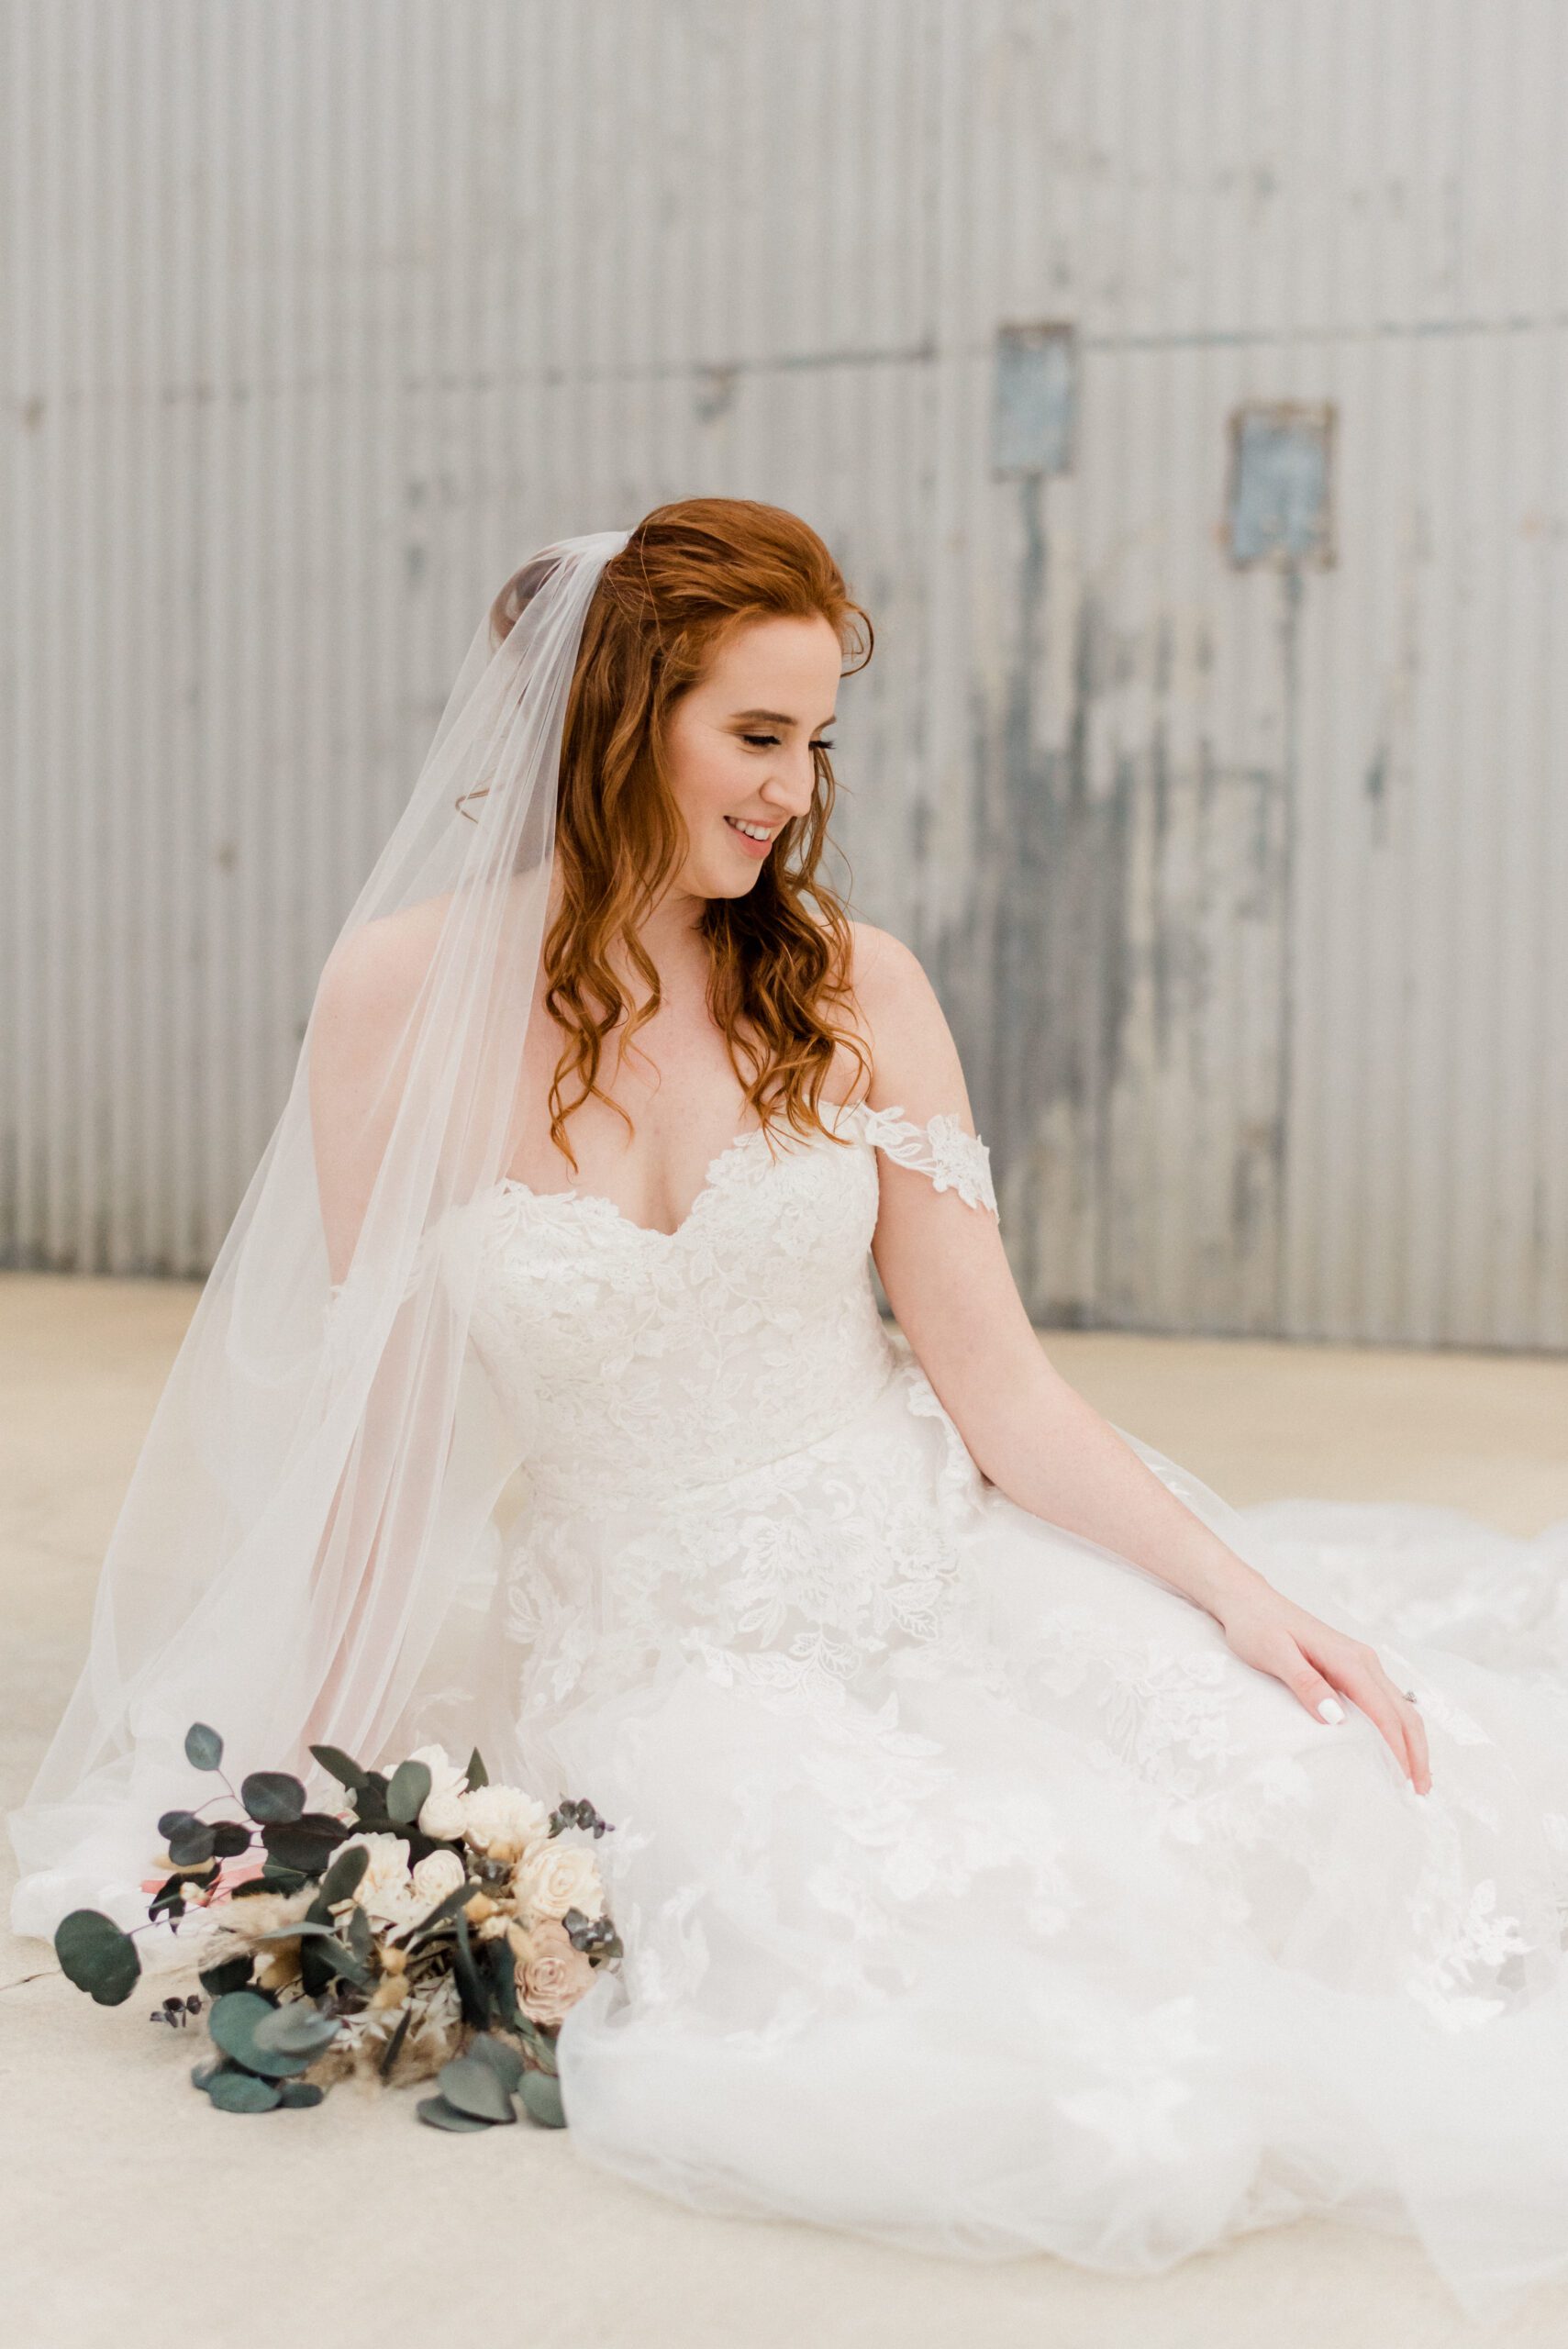 Amber's Bridals at The Gin at Hidalgo Falls in Navasota, Texas with Rachel Driskell Photography